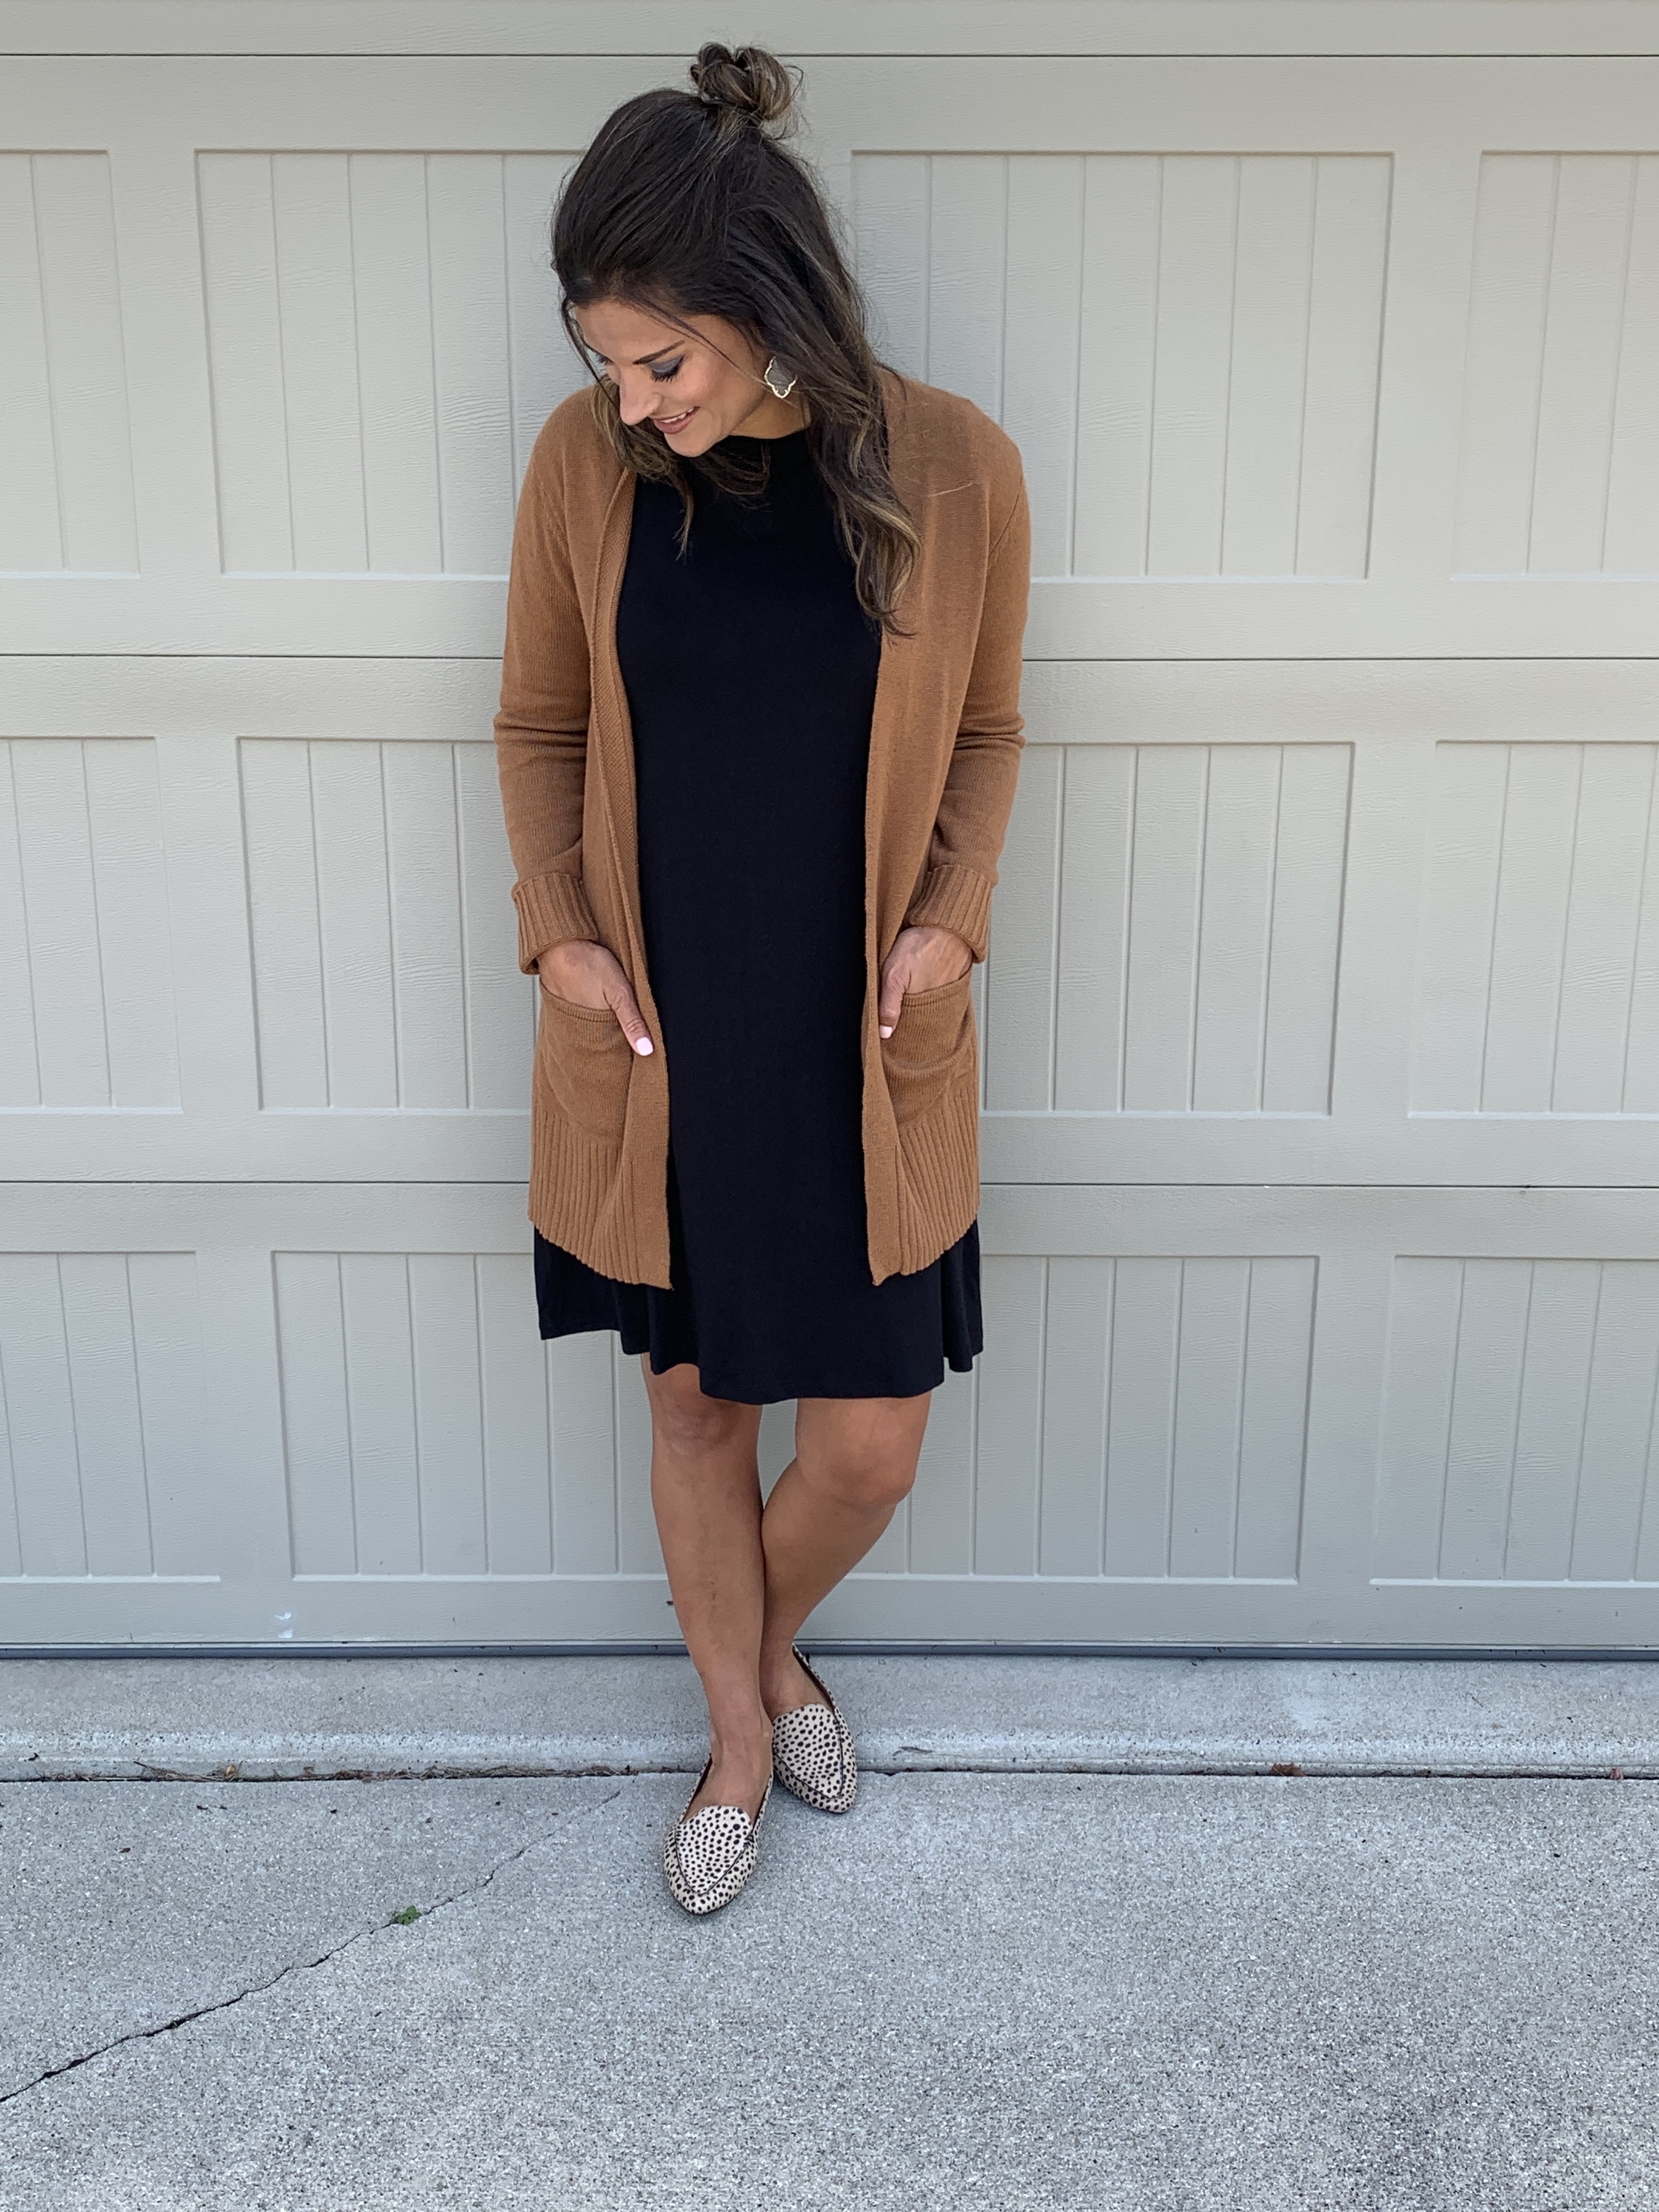 How to wear one black dress 12 ways #justpostedblog #ShopStyle